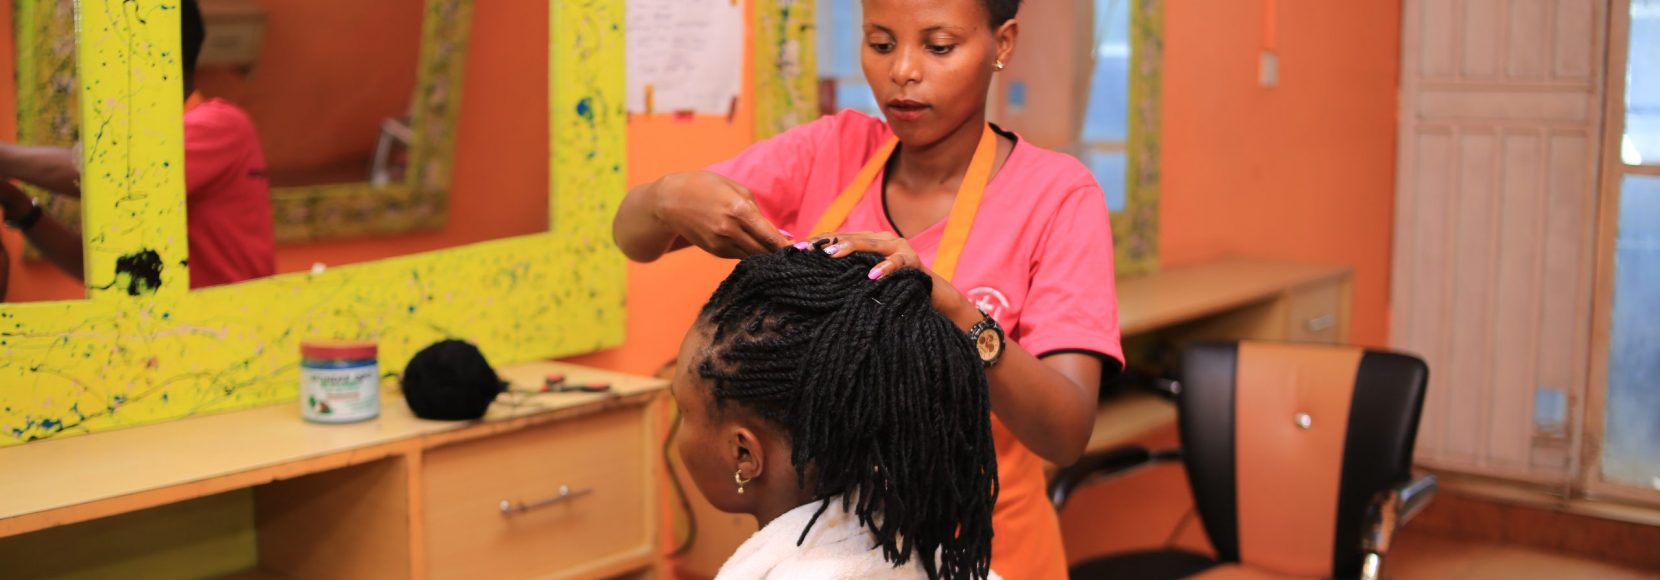 Carolyn works on a client in her salon business near Kampala, Uganda